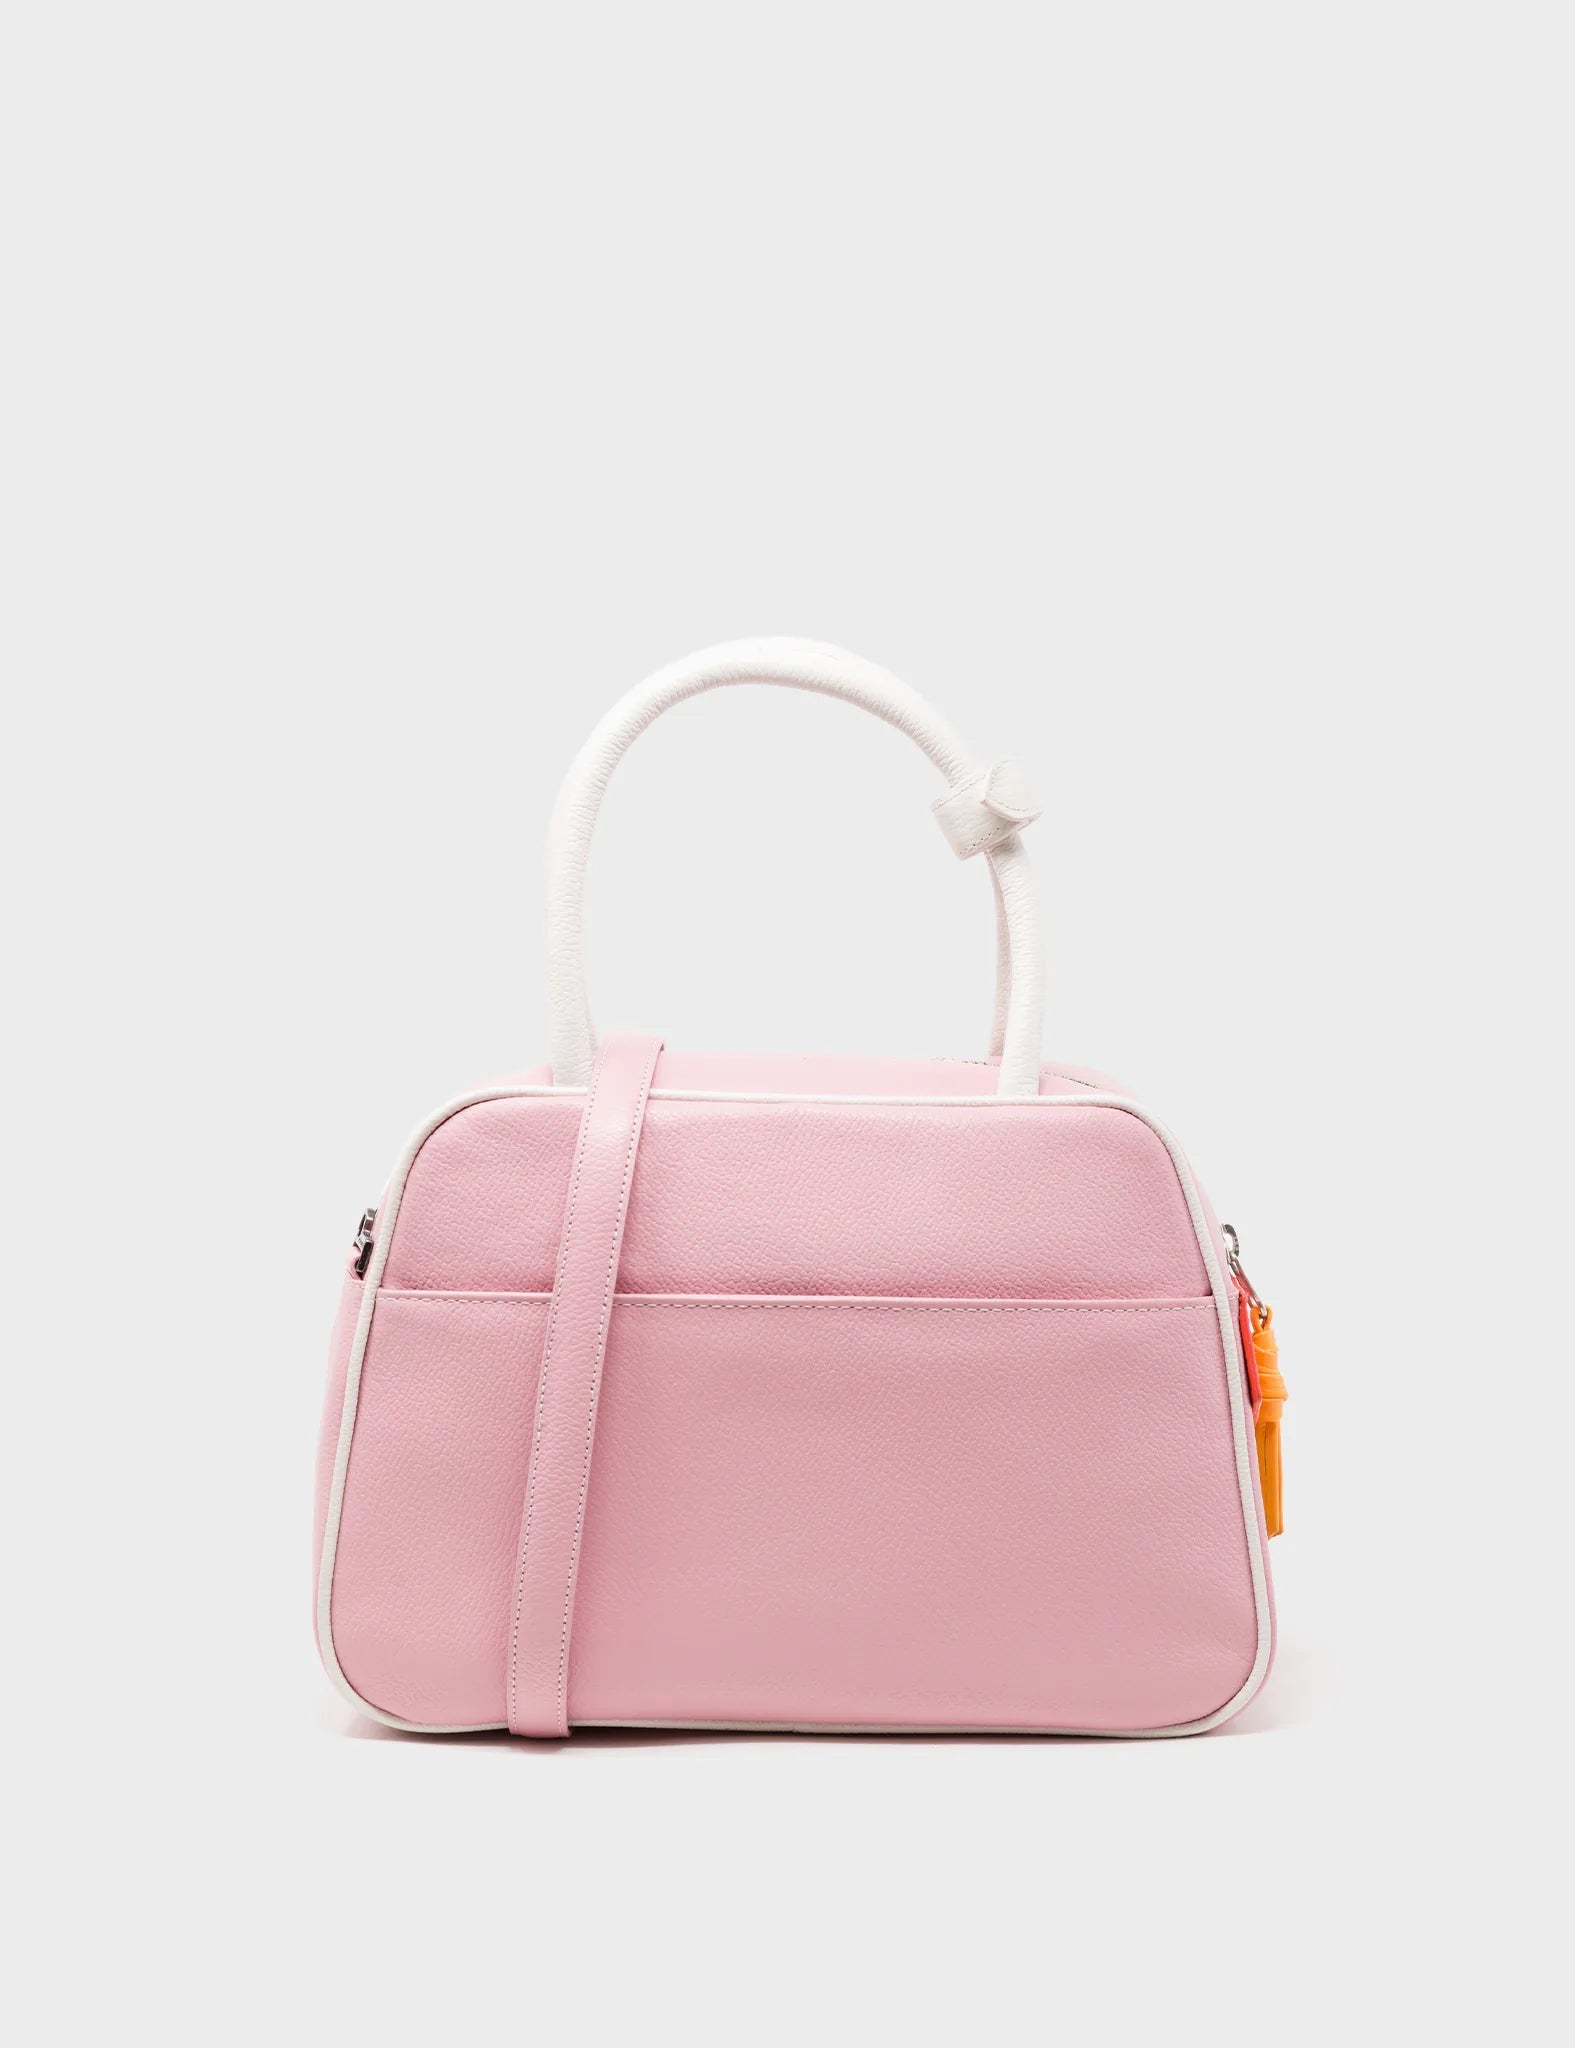 Medium Crossbody Blush Pink Leather Bag - Tiger And Snake Print - Back